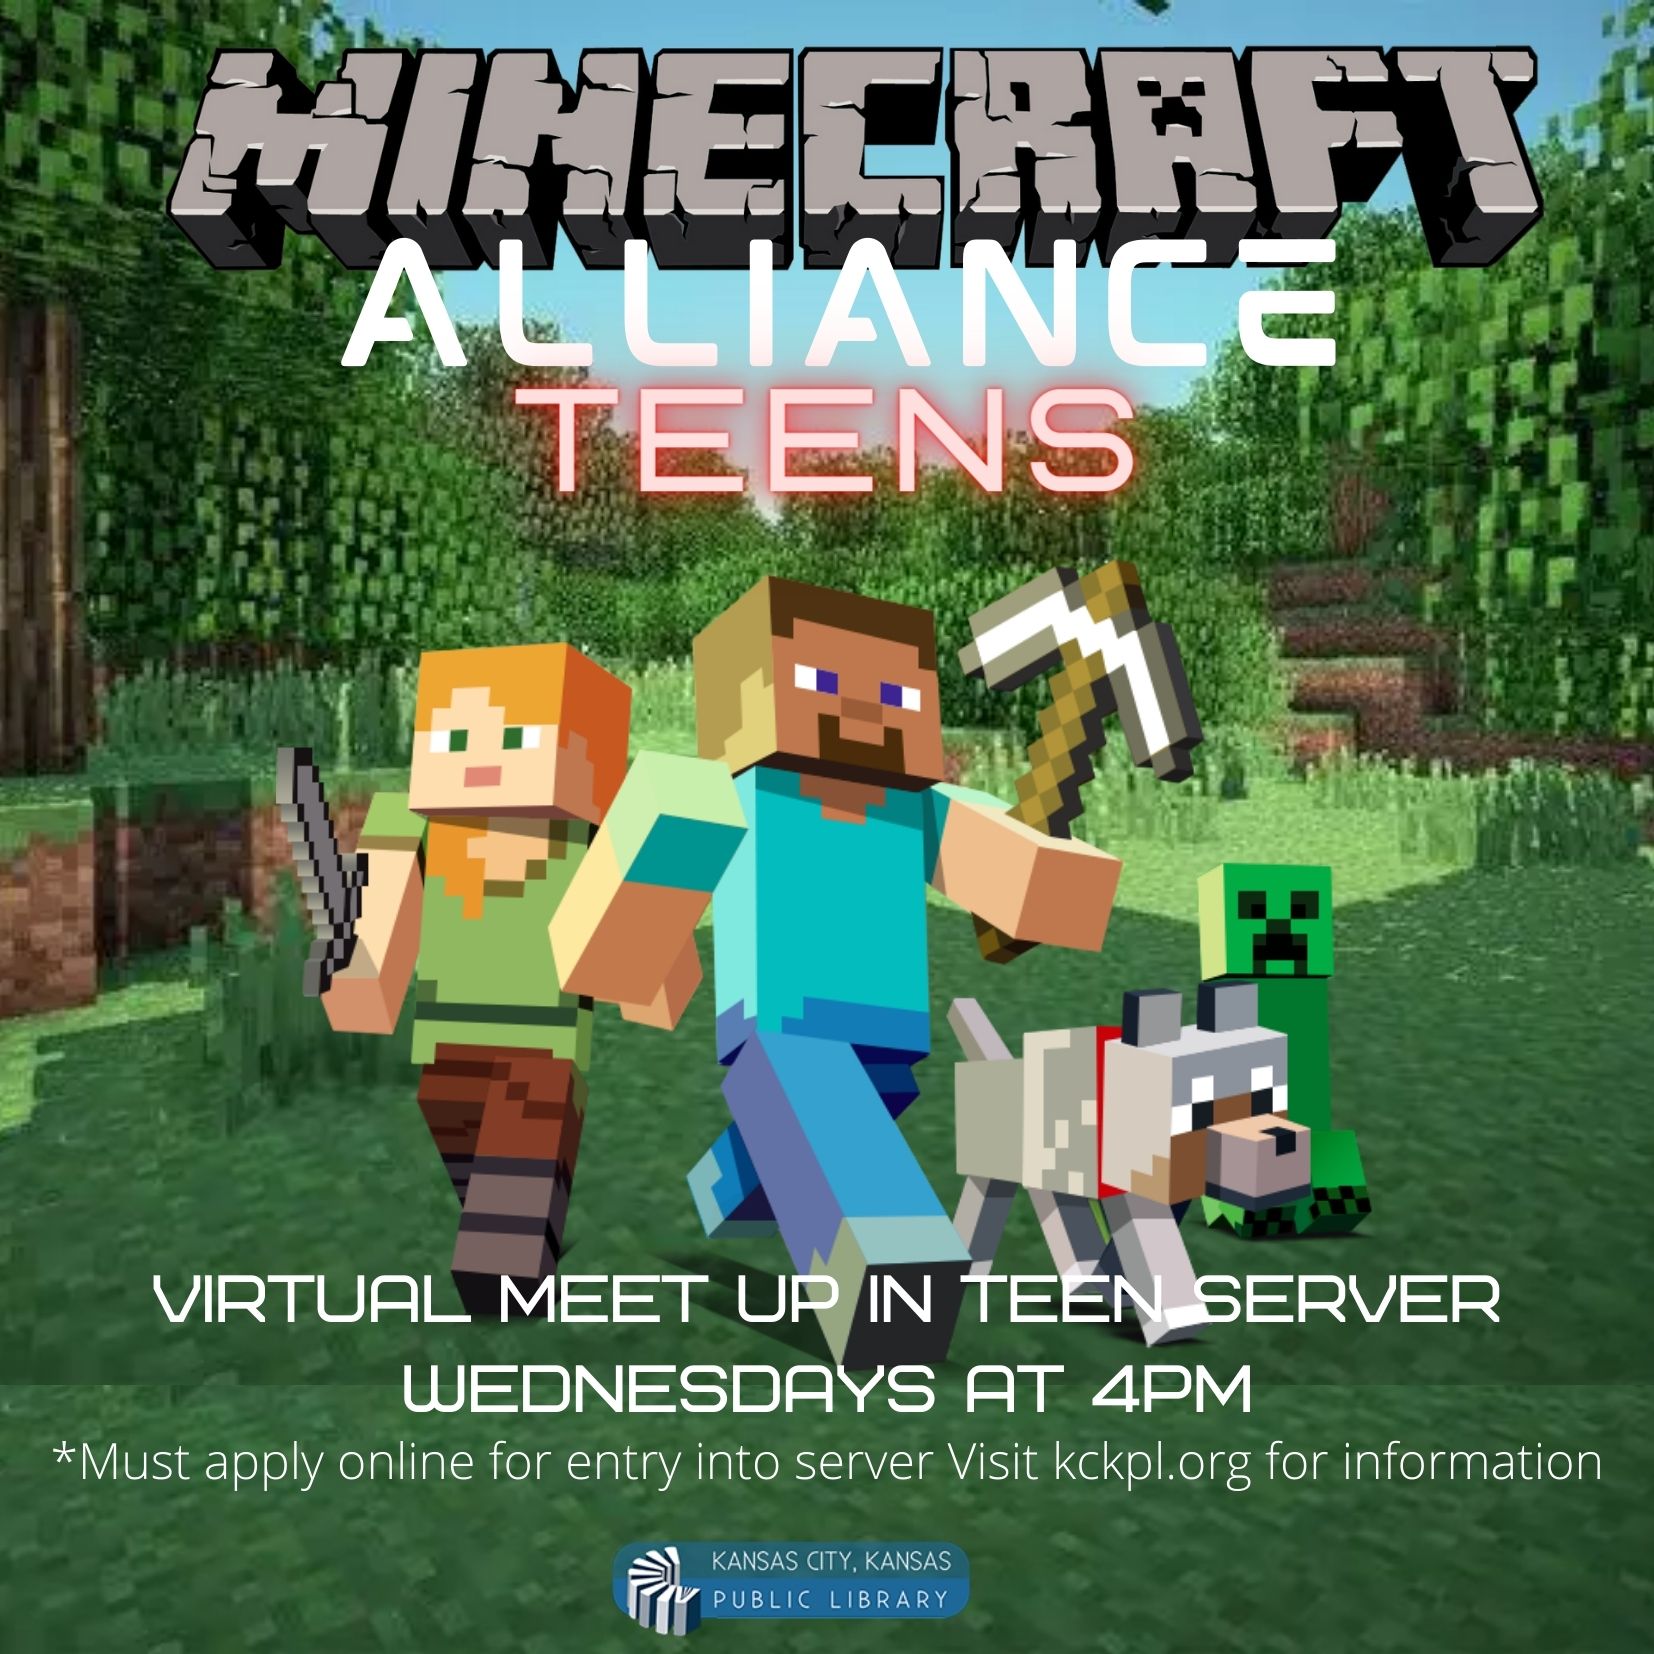 Minecraft Alliance Teen Server